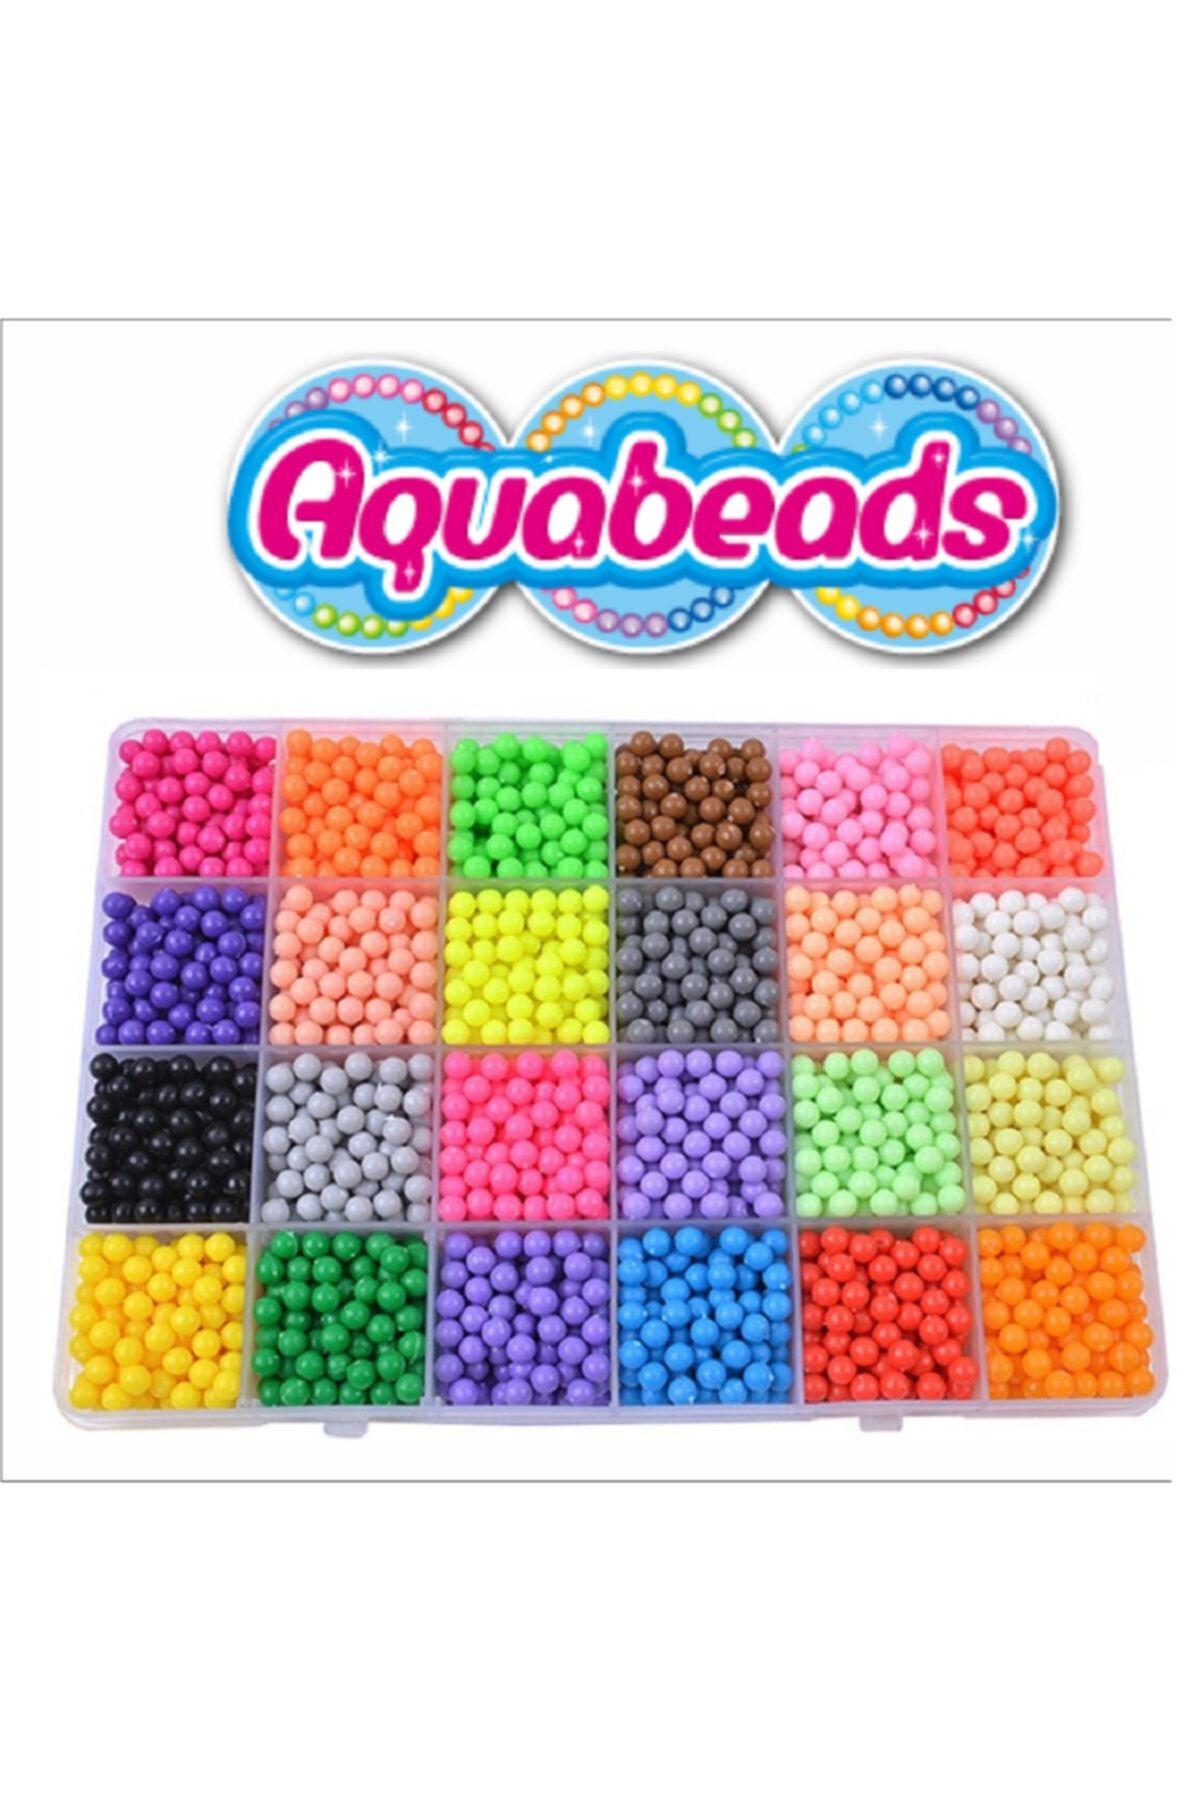 Aqua Beads Yedek Boncuk Paketi 2400 Adet Aquabeads Deluxe Tasarım Devam Seti Aqua 2400 Yedek